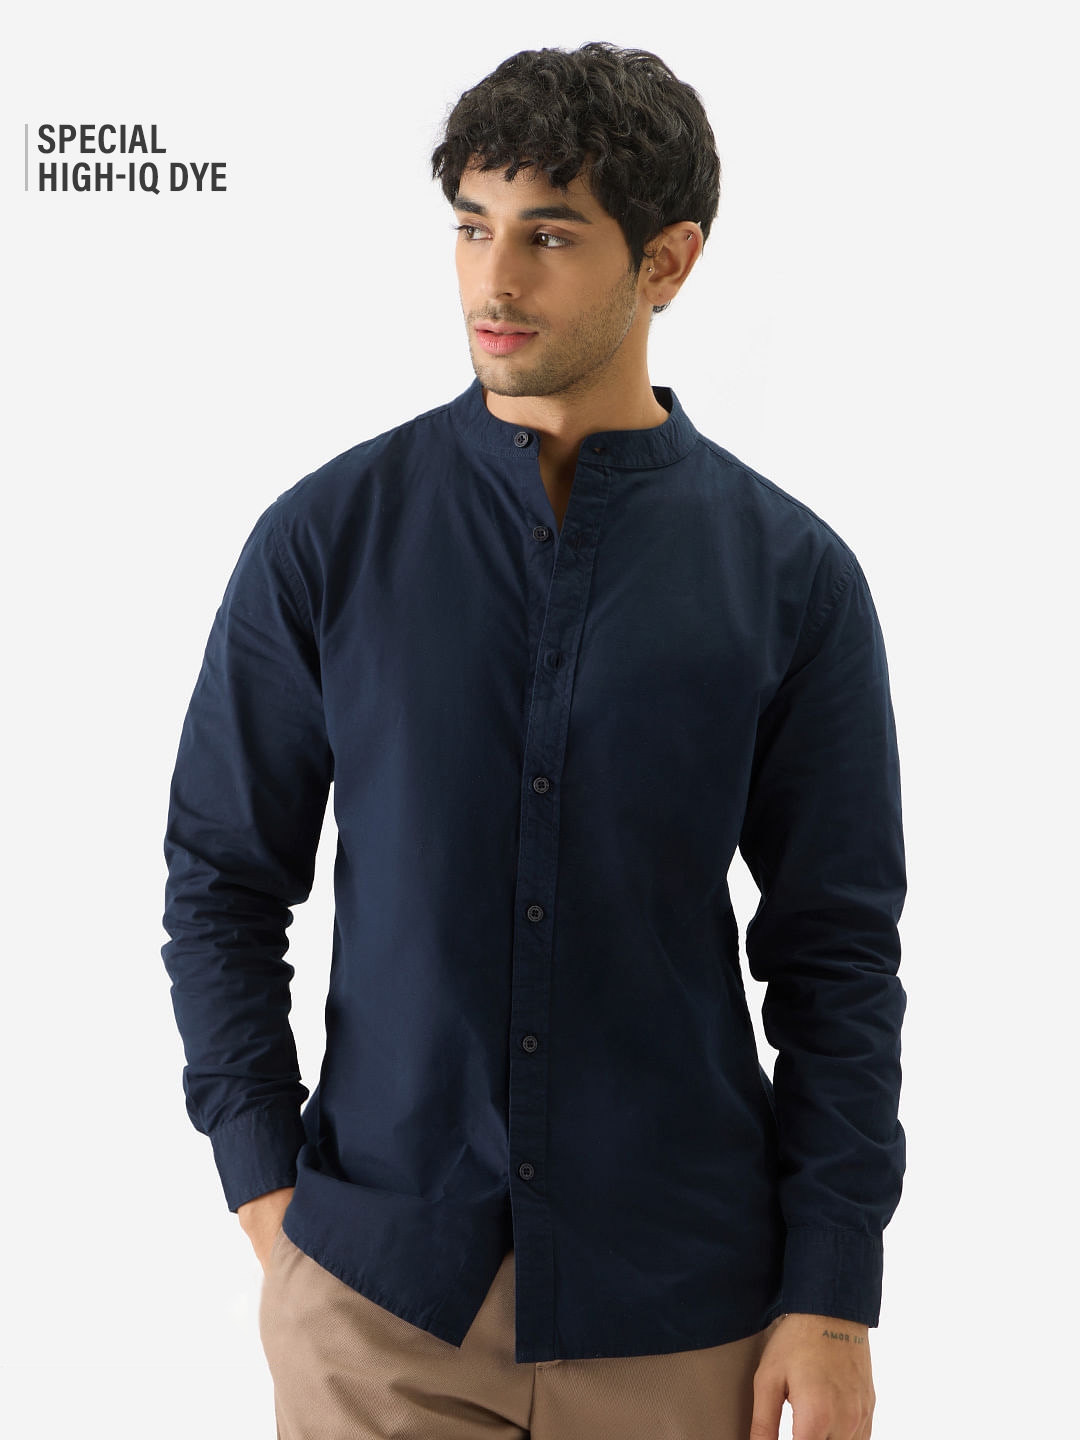 The Souled Store | Men's Solids: Navy Blue Mandarin Shirts